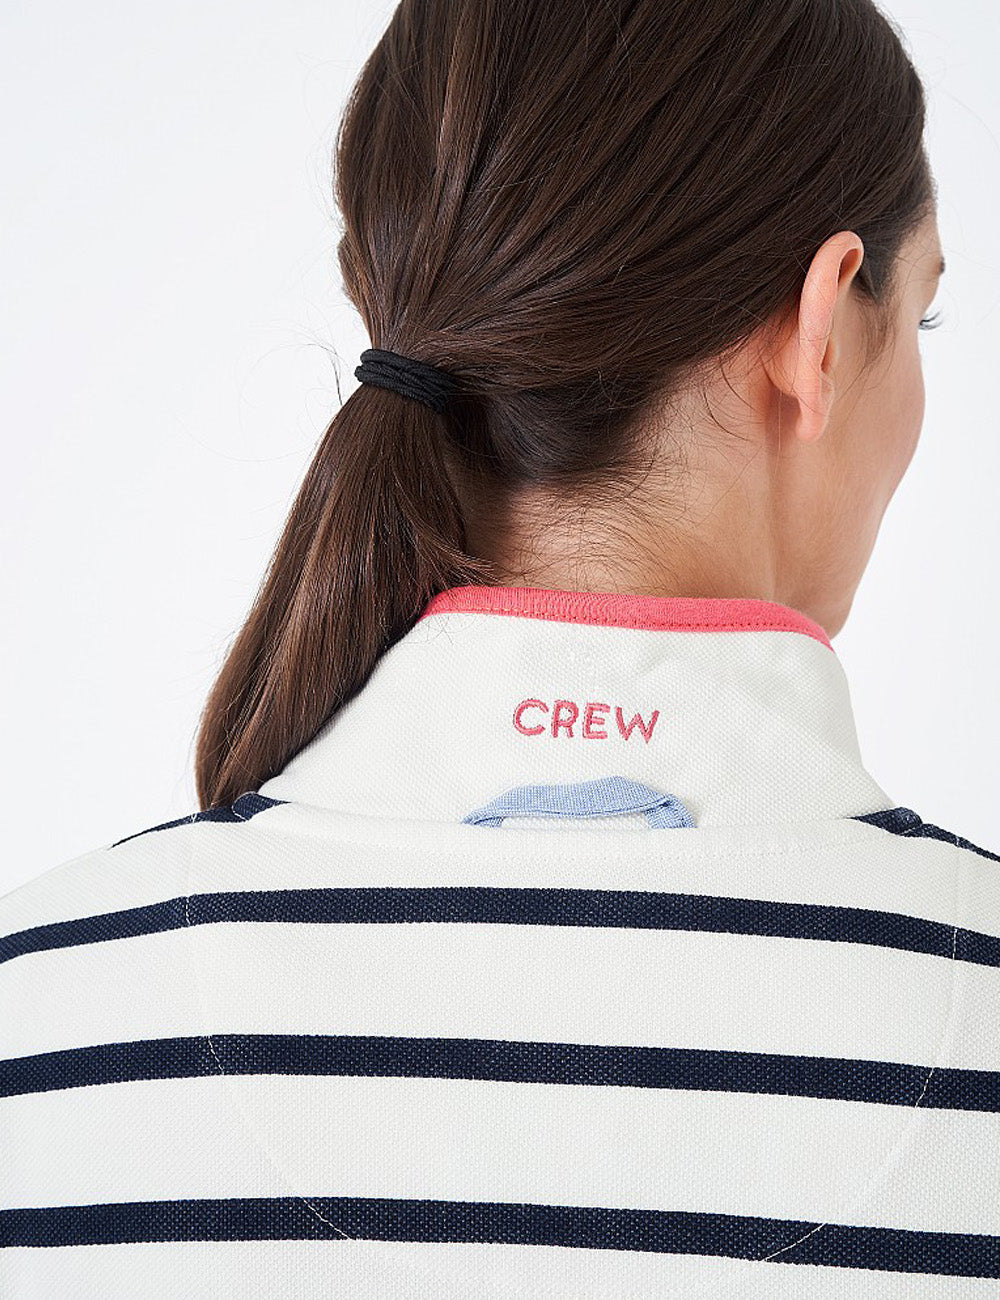 Crew Clothing Padstow Pique Sweatshirt - White/Navy